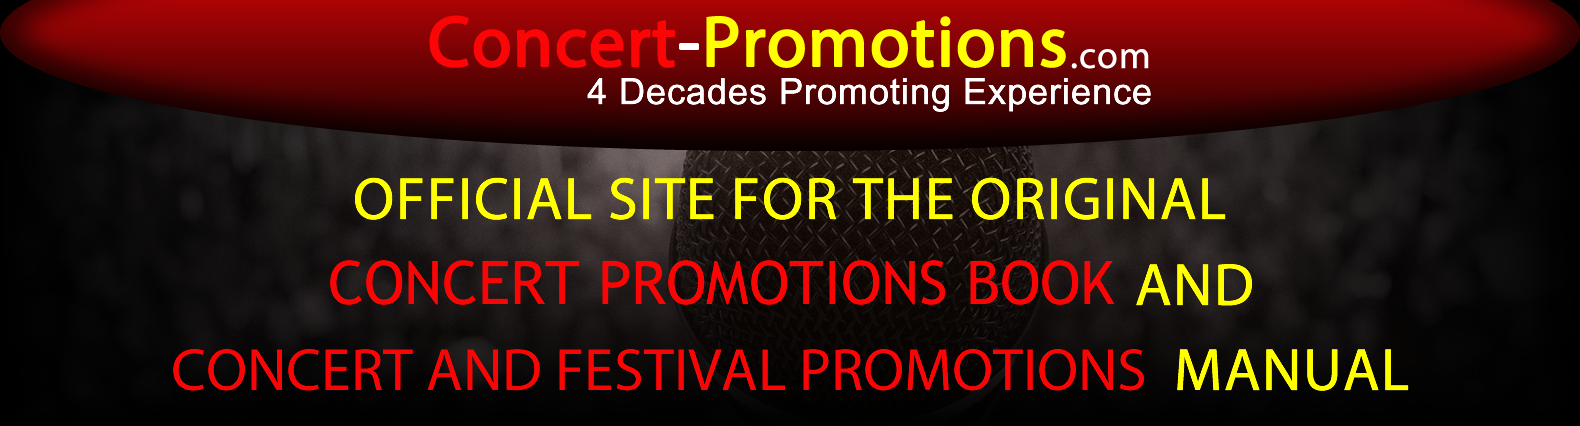 concert promotions banner